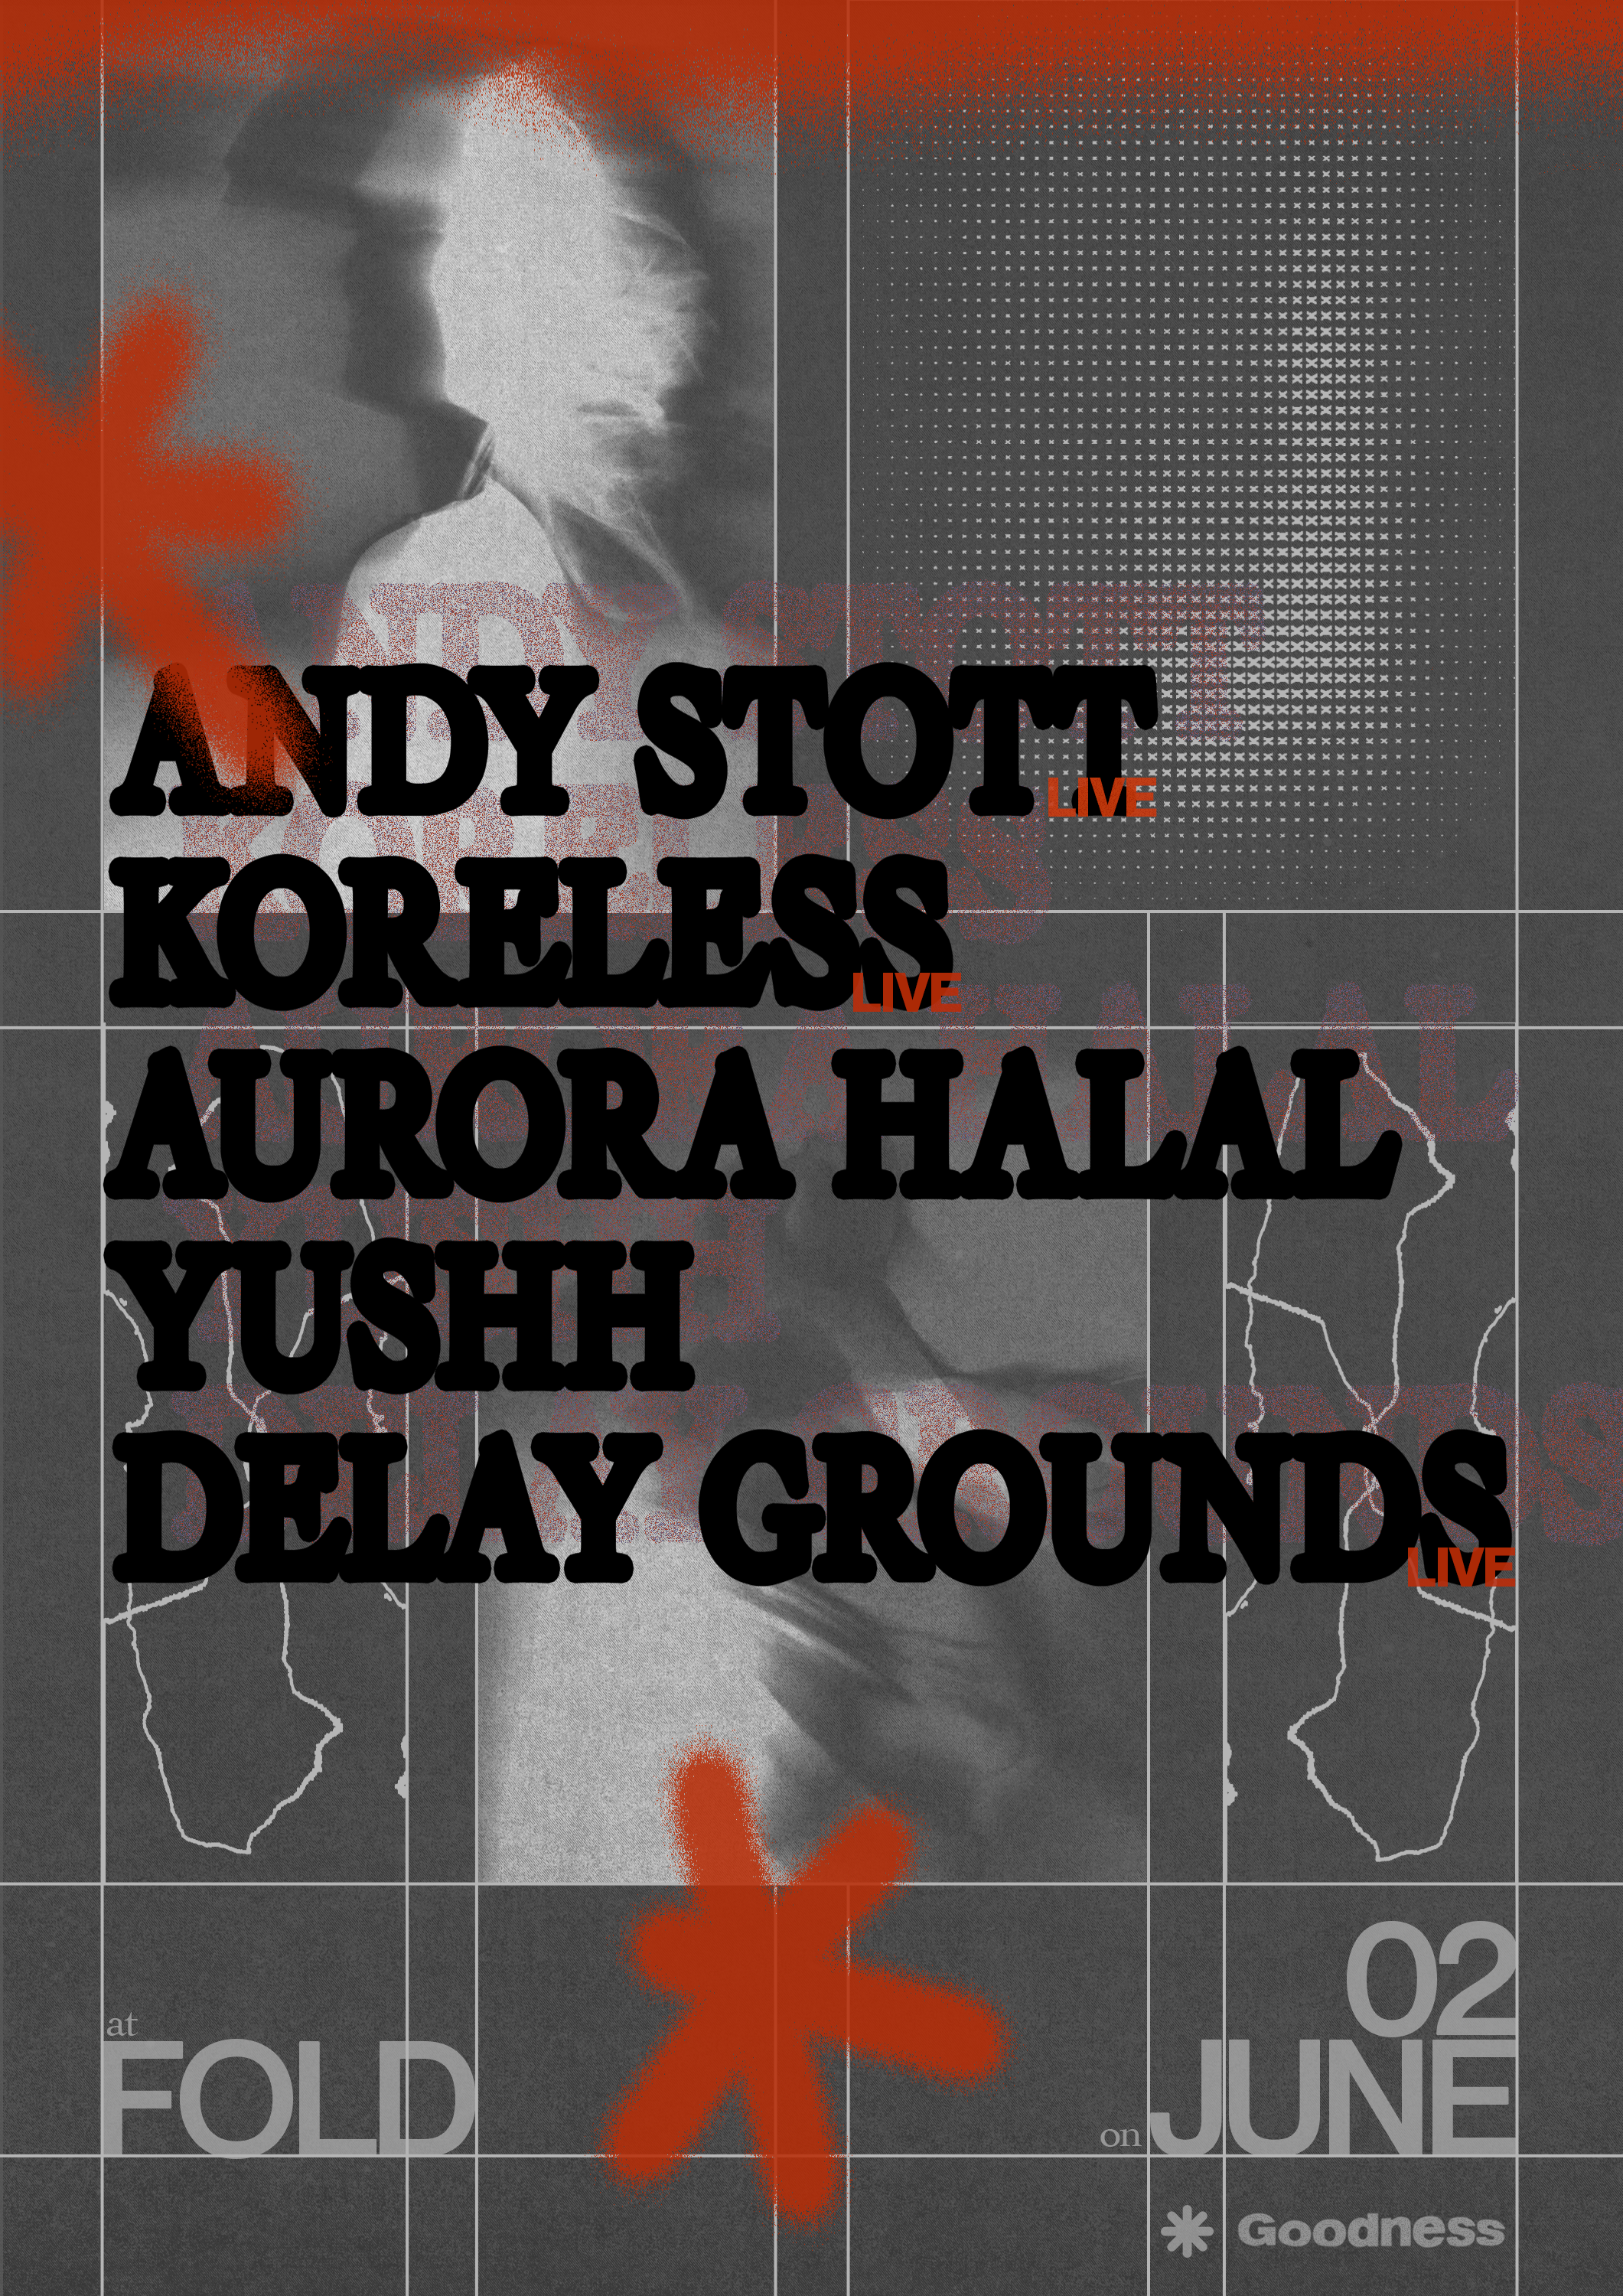 Goodness: Andy Stott [live], Koreless [live], Aurora Halal, Yushh, Delay Grounds [live] - フライヤー表